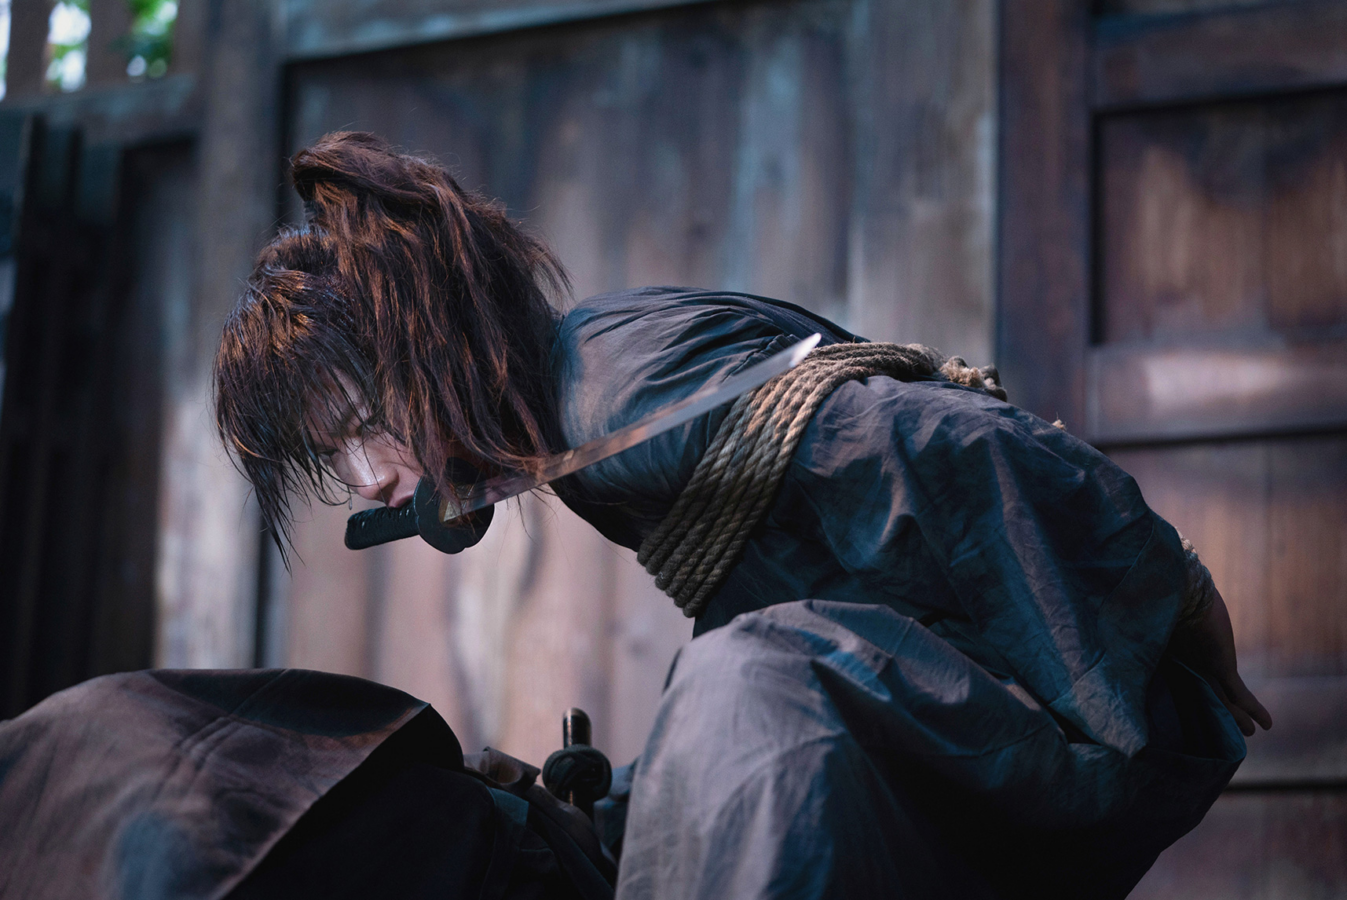 New Trailer for 'Rurouni Kenshin: The Final / The Beginning' Movies